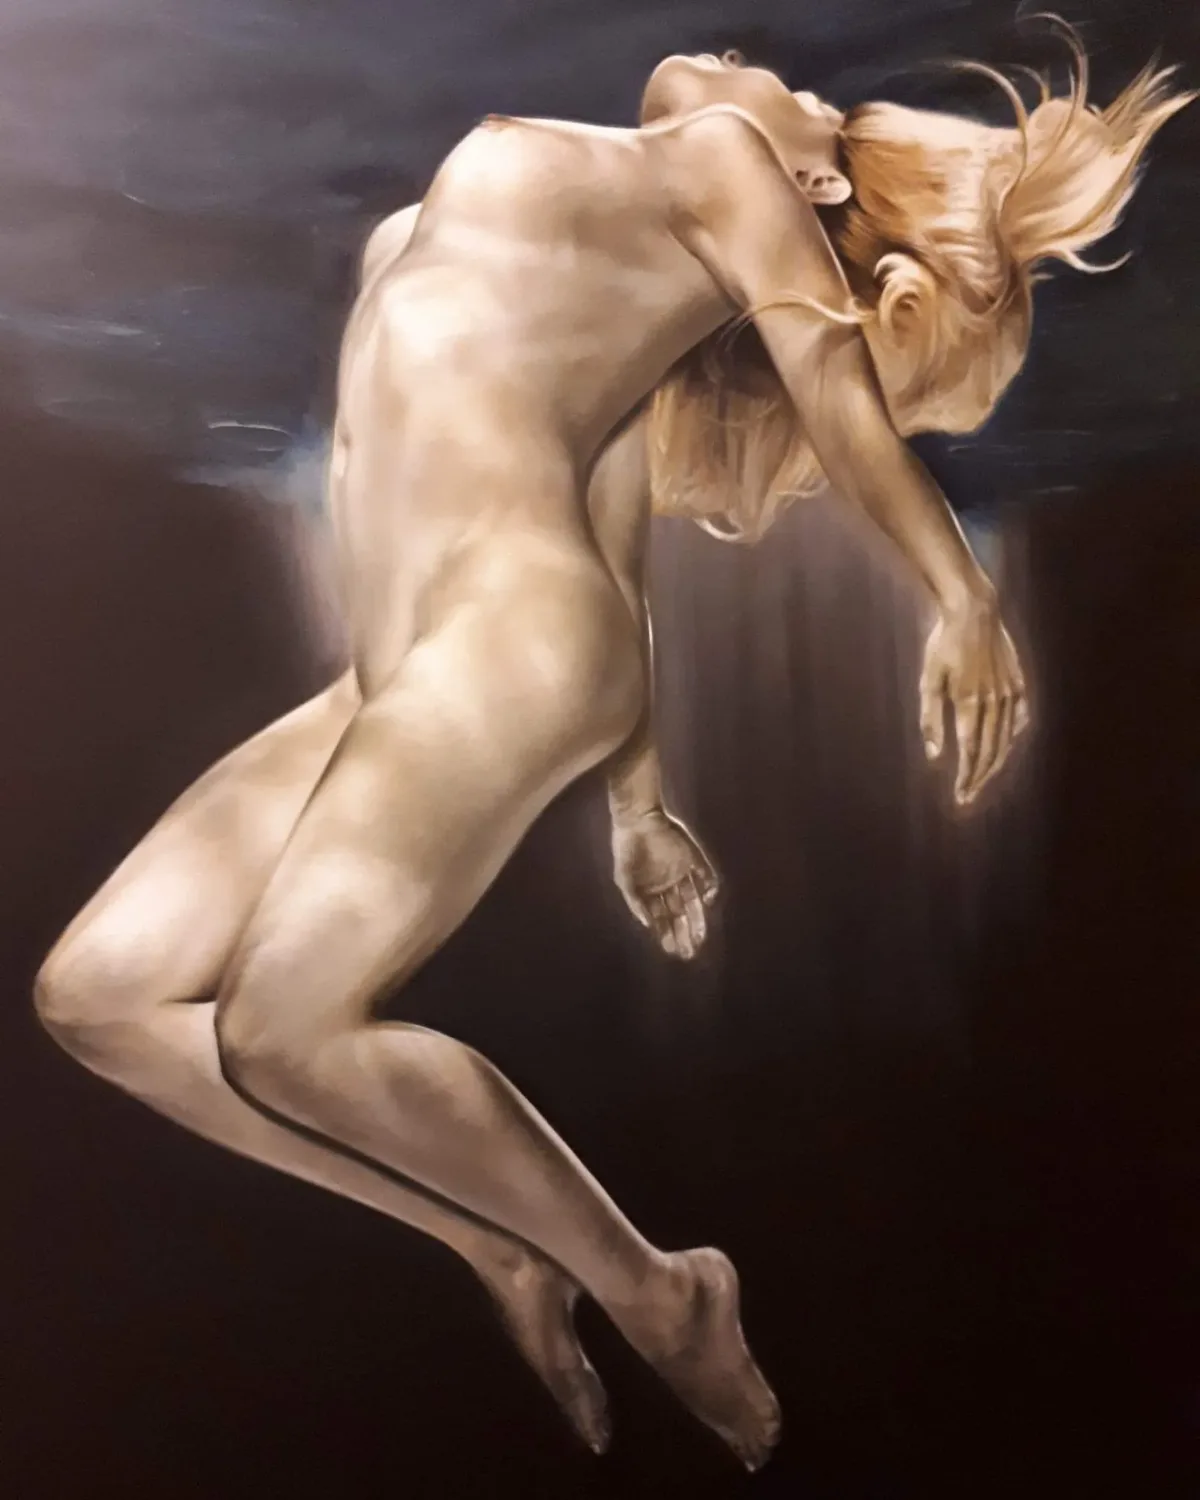 Painting of contemporary artist Vartan Ghazarian - Breathe. For sale.